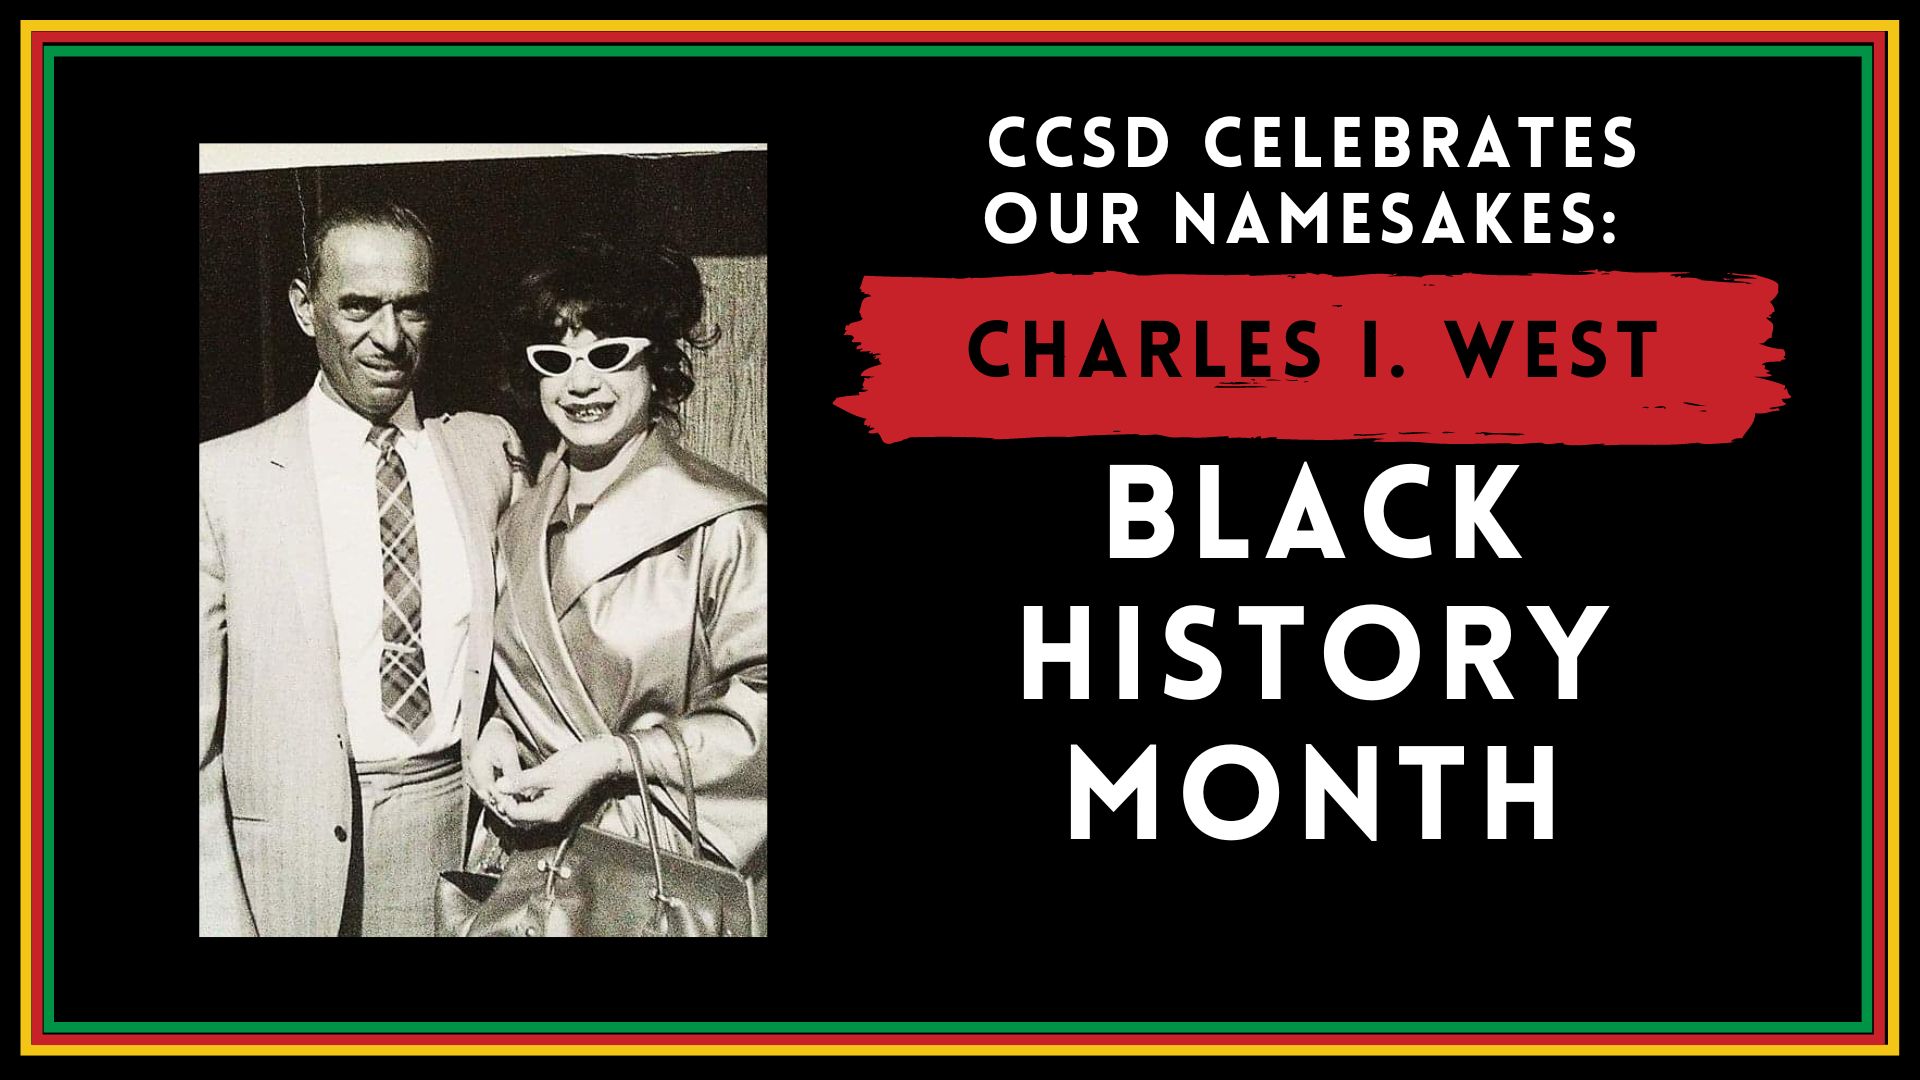 CCSD celebrates its namesakes: Charles I. West